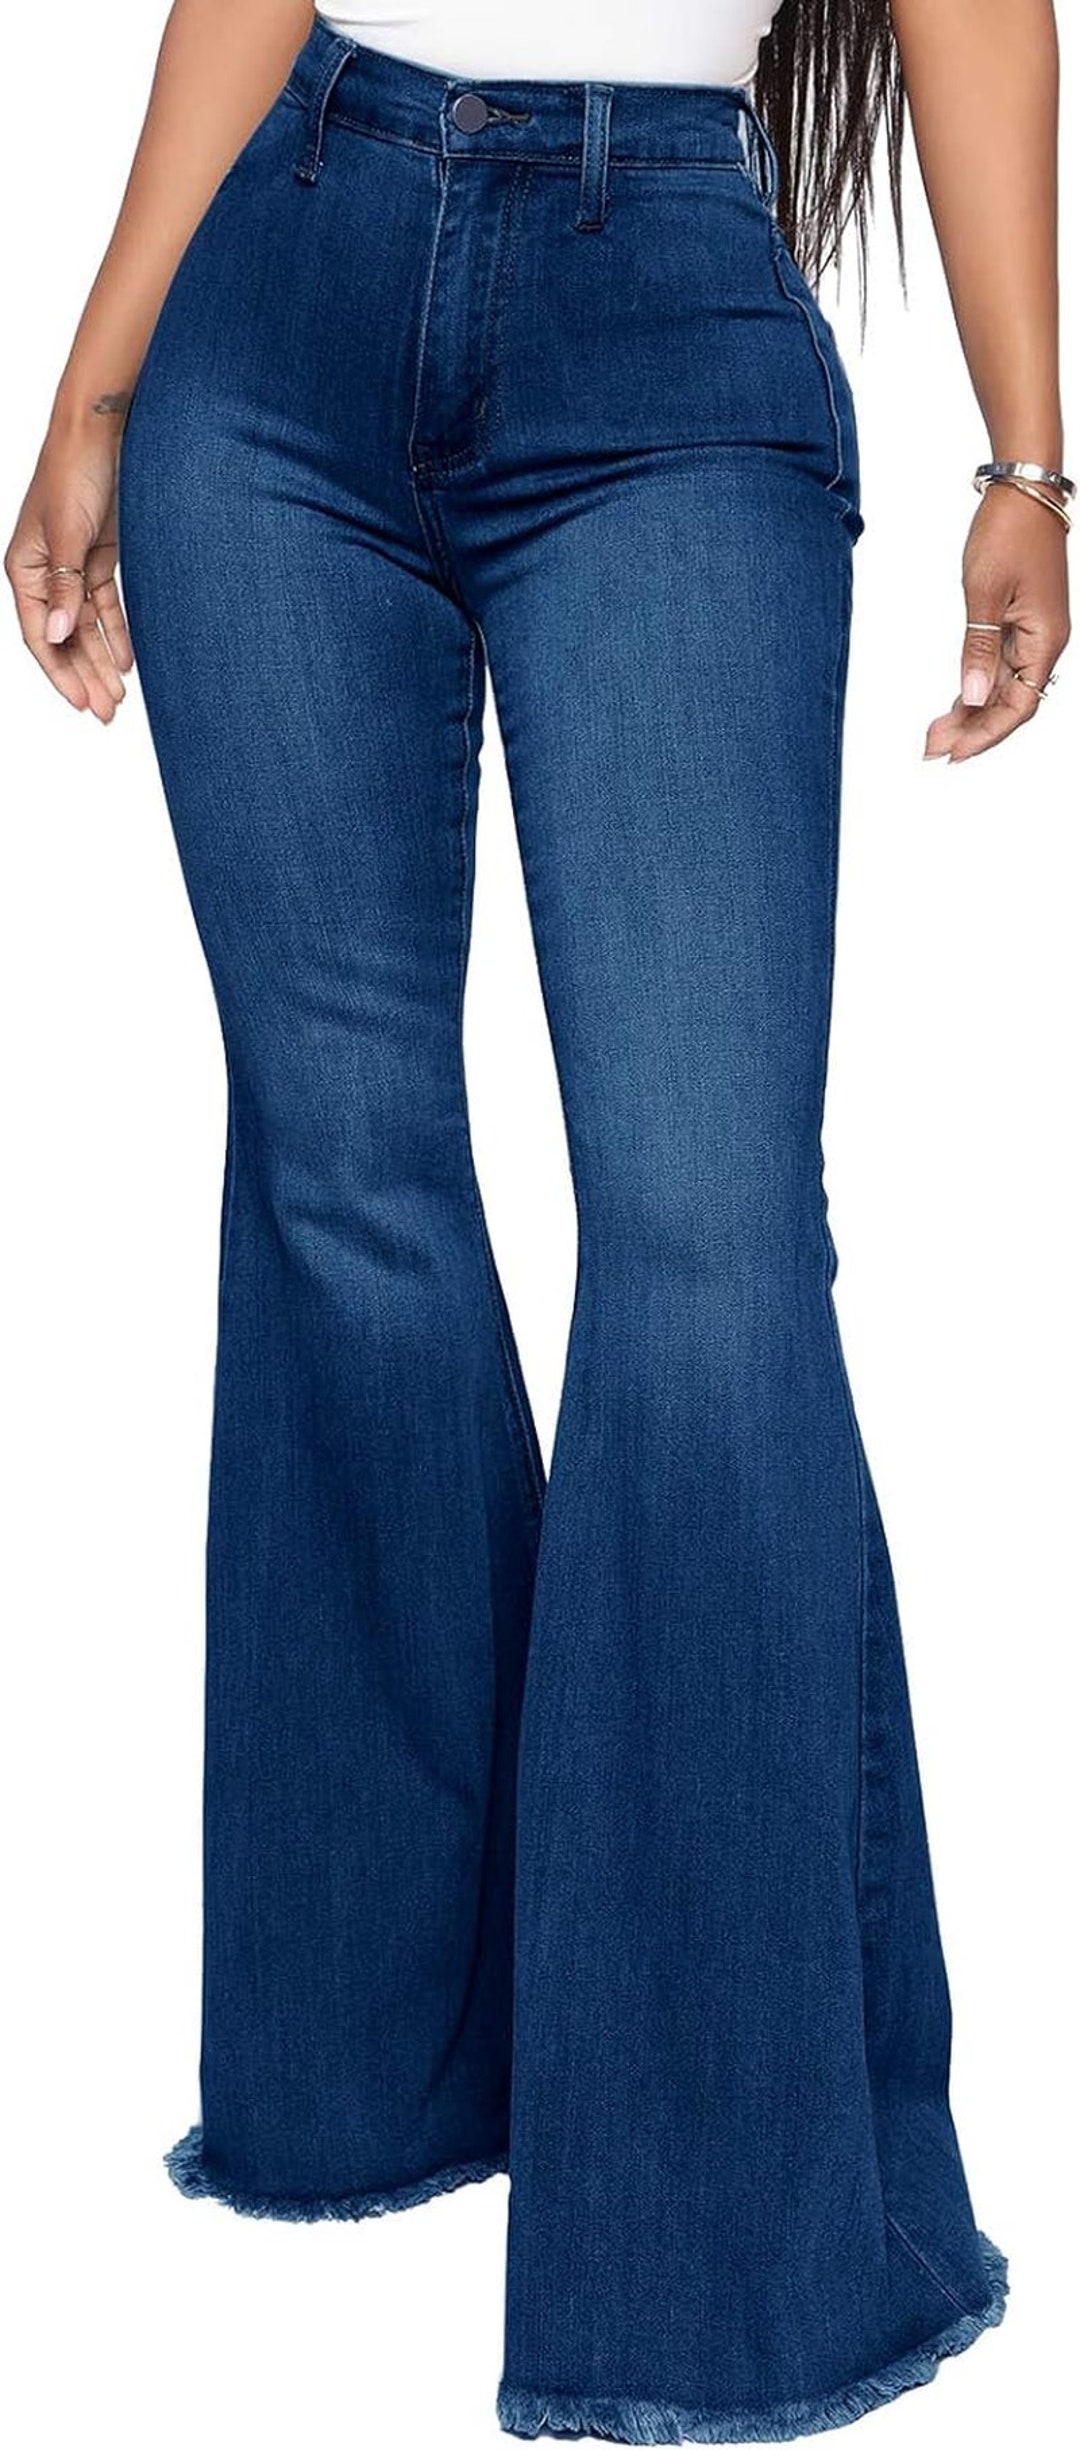 Stylish Bell Bottom Jeans for Women: Distressed Flare Denim - Etsy